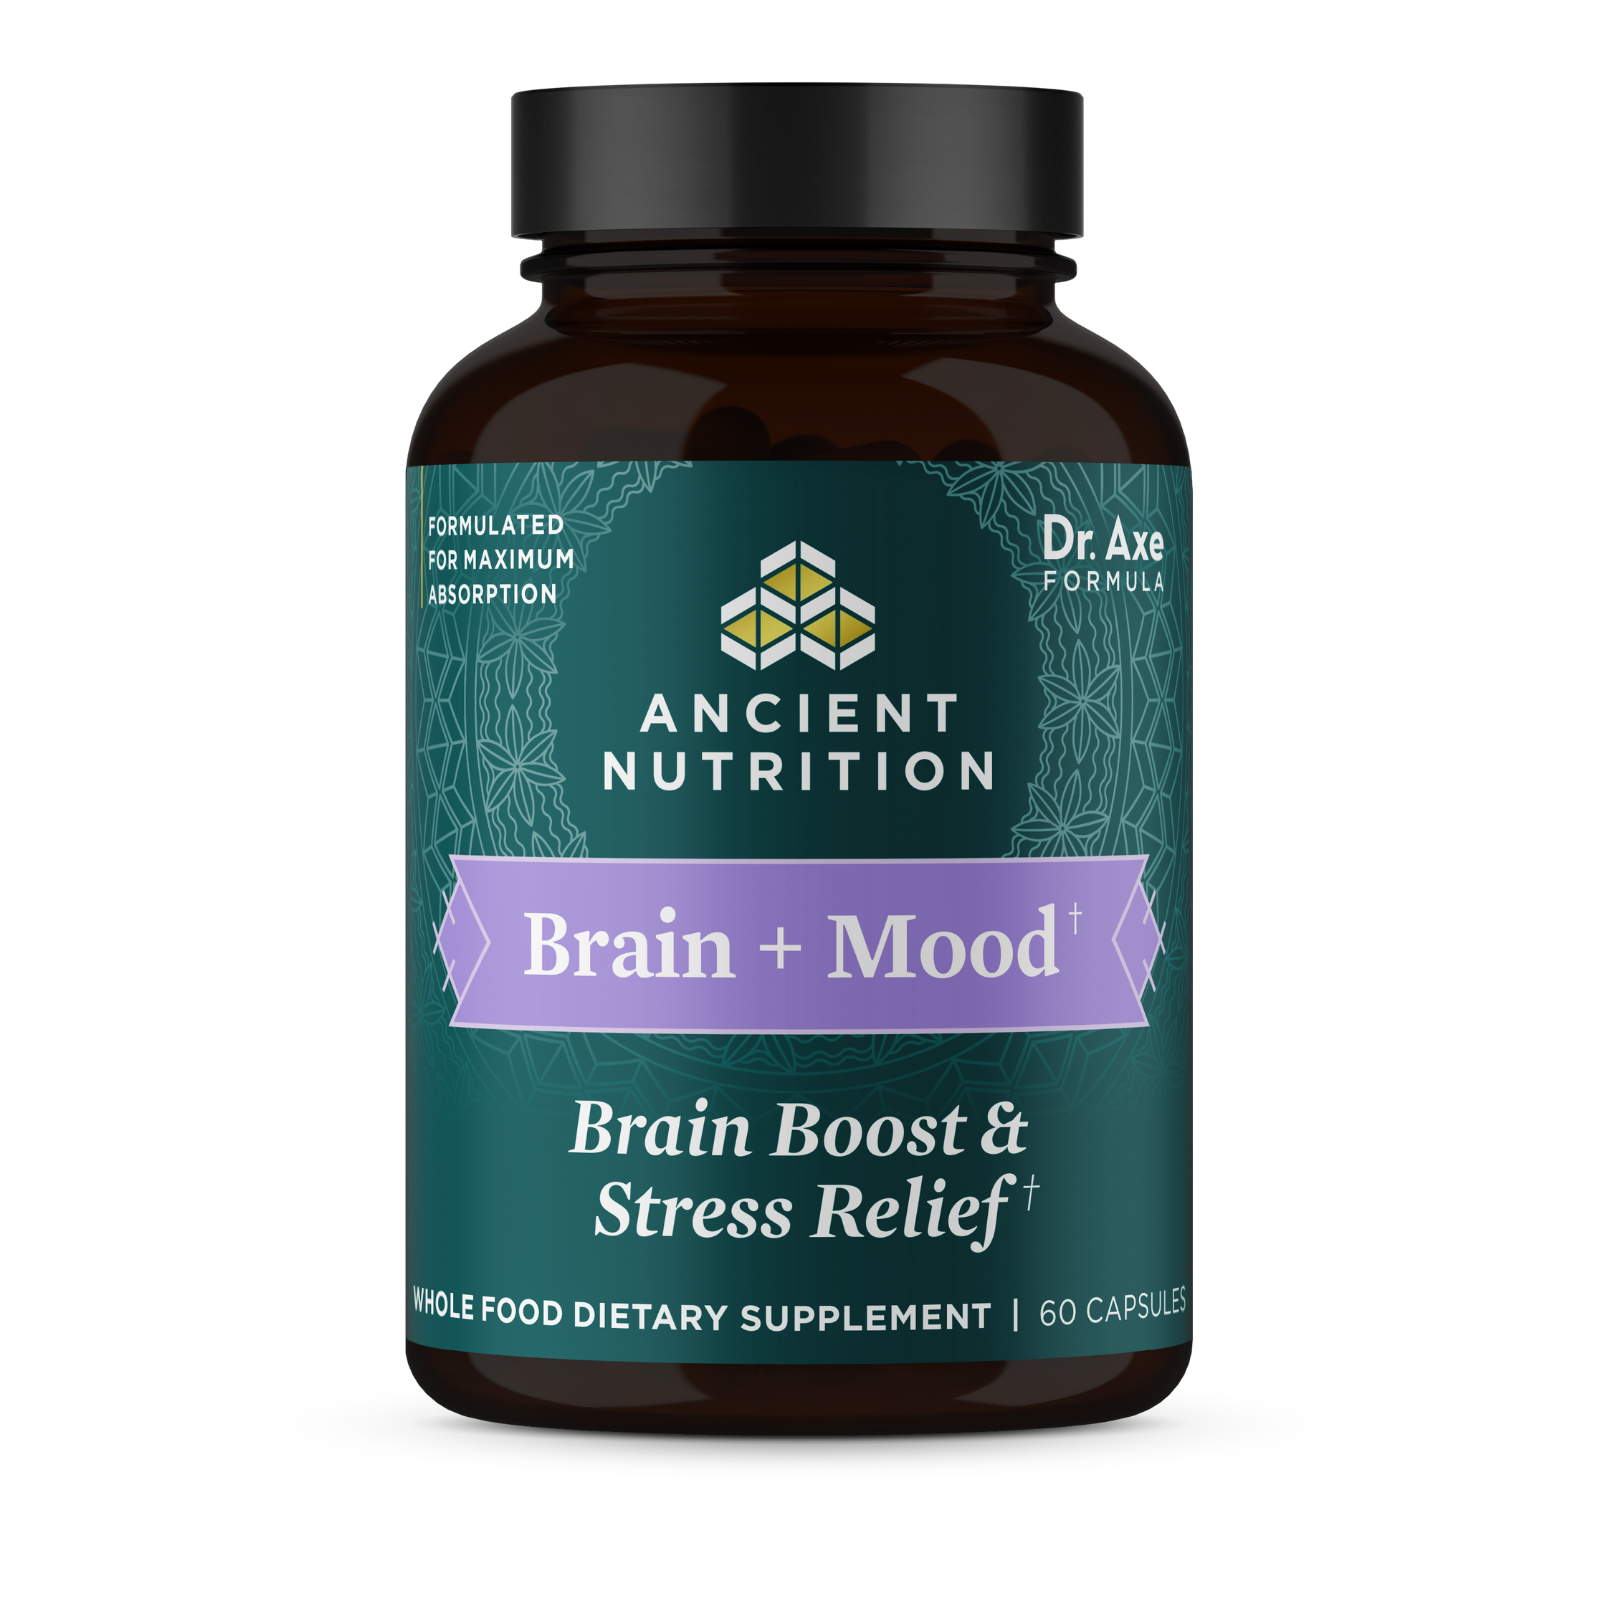 Brain + Mood - Ancient Nutrition